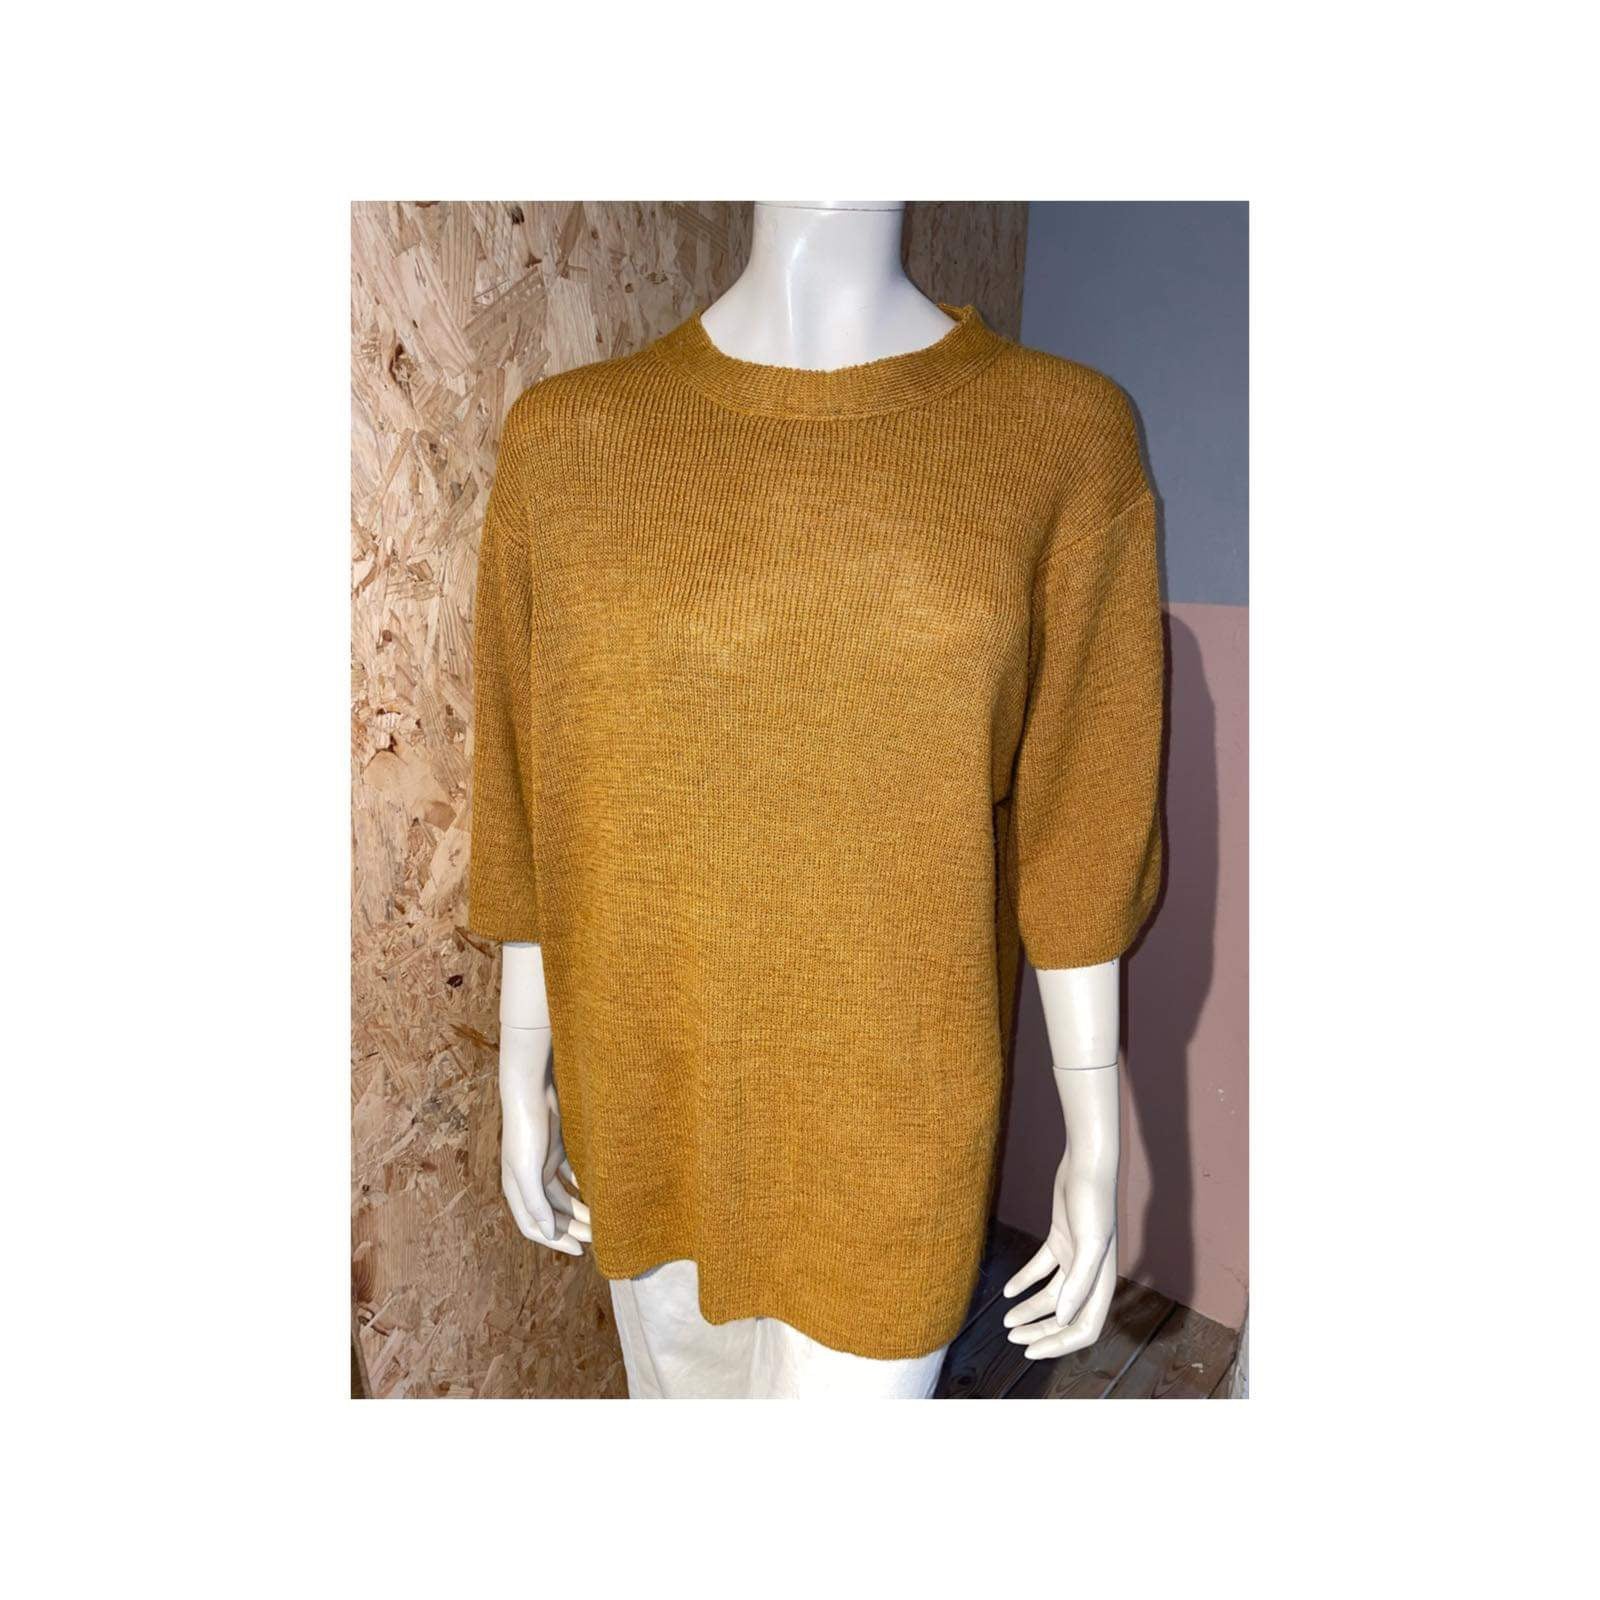 Acne Studios - Sweater - Size: XL